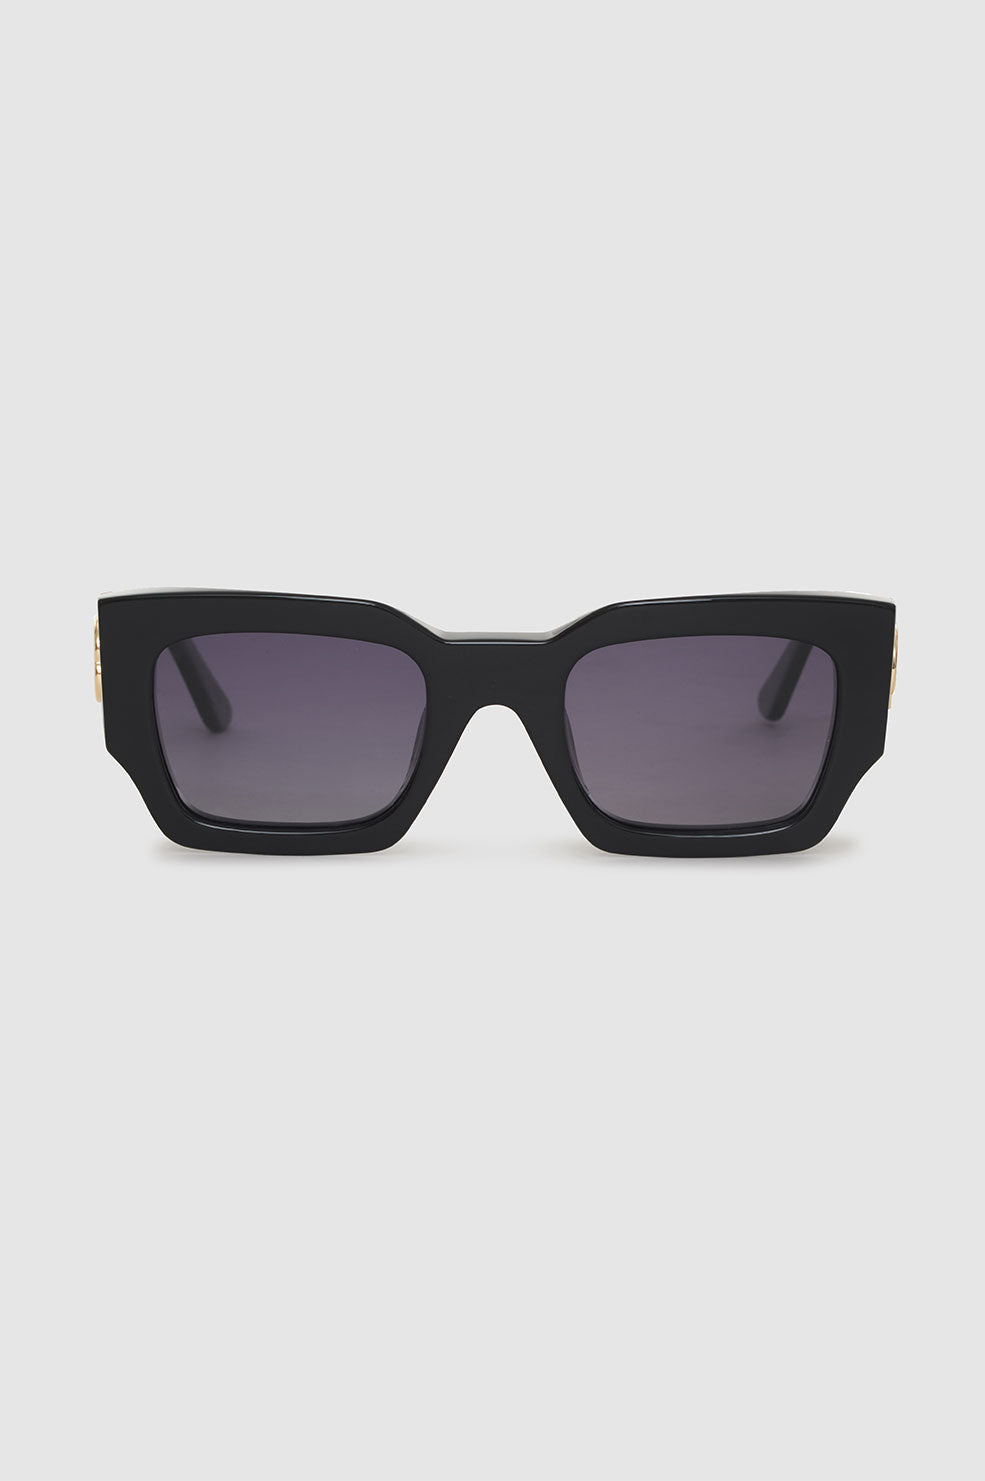 Indio Sunglasses Monogram  product image